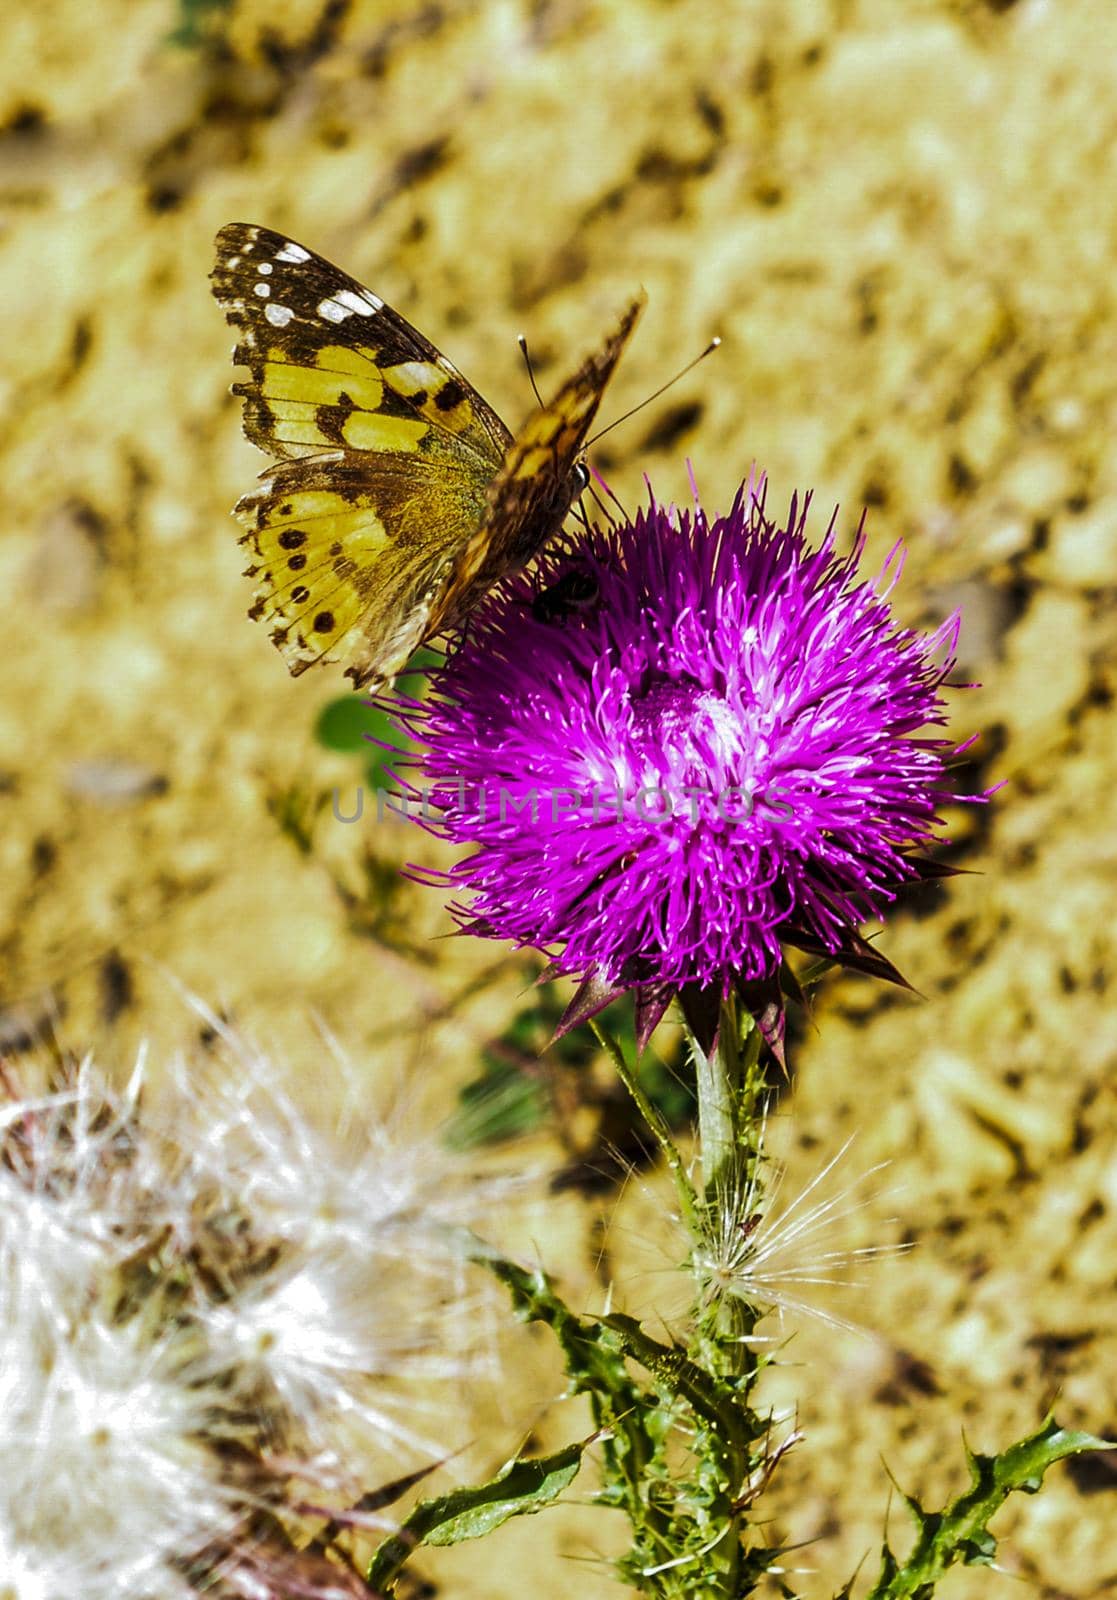 Viceroy butterfly on a purple flower on display by berkay